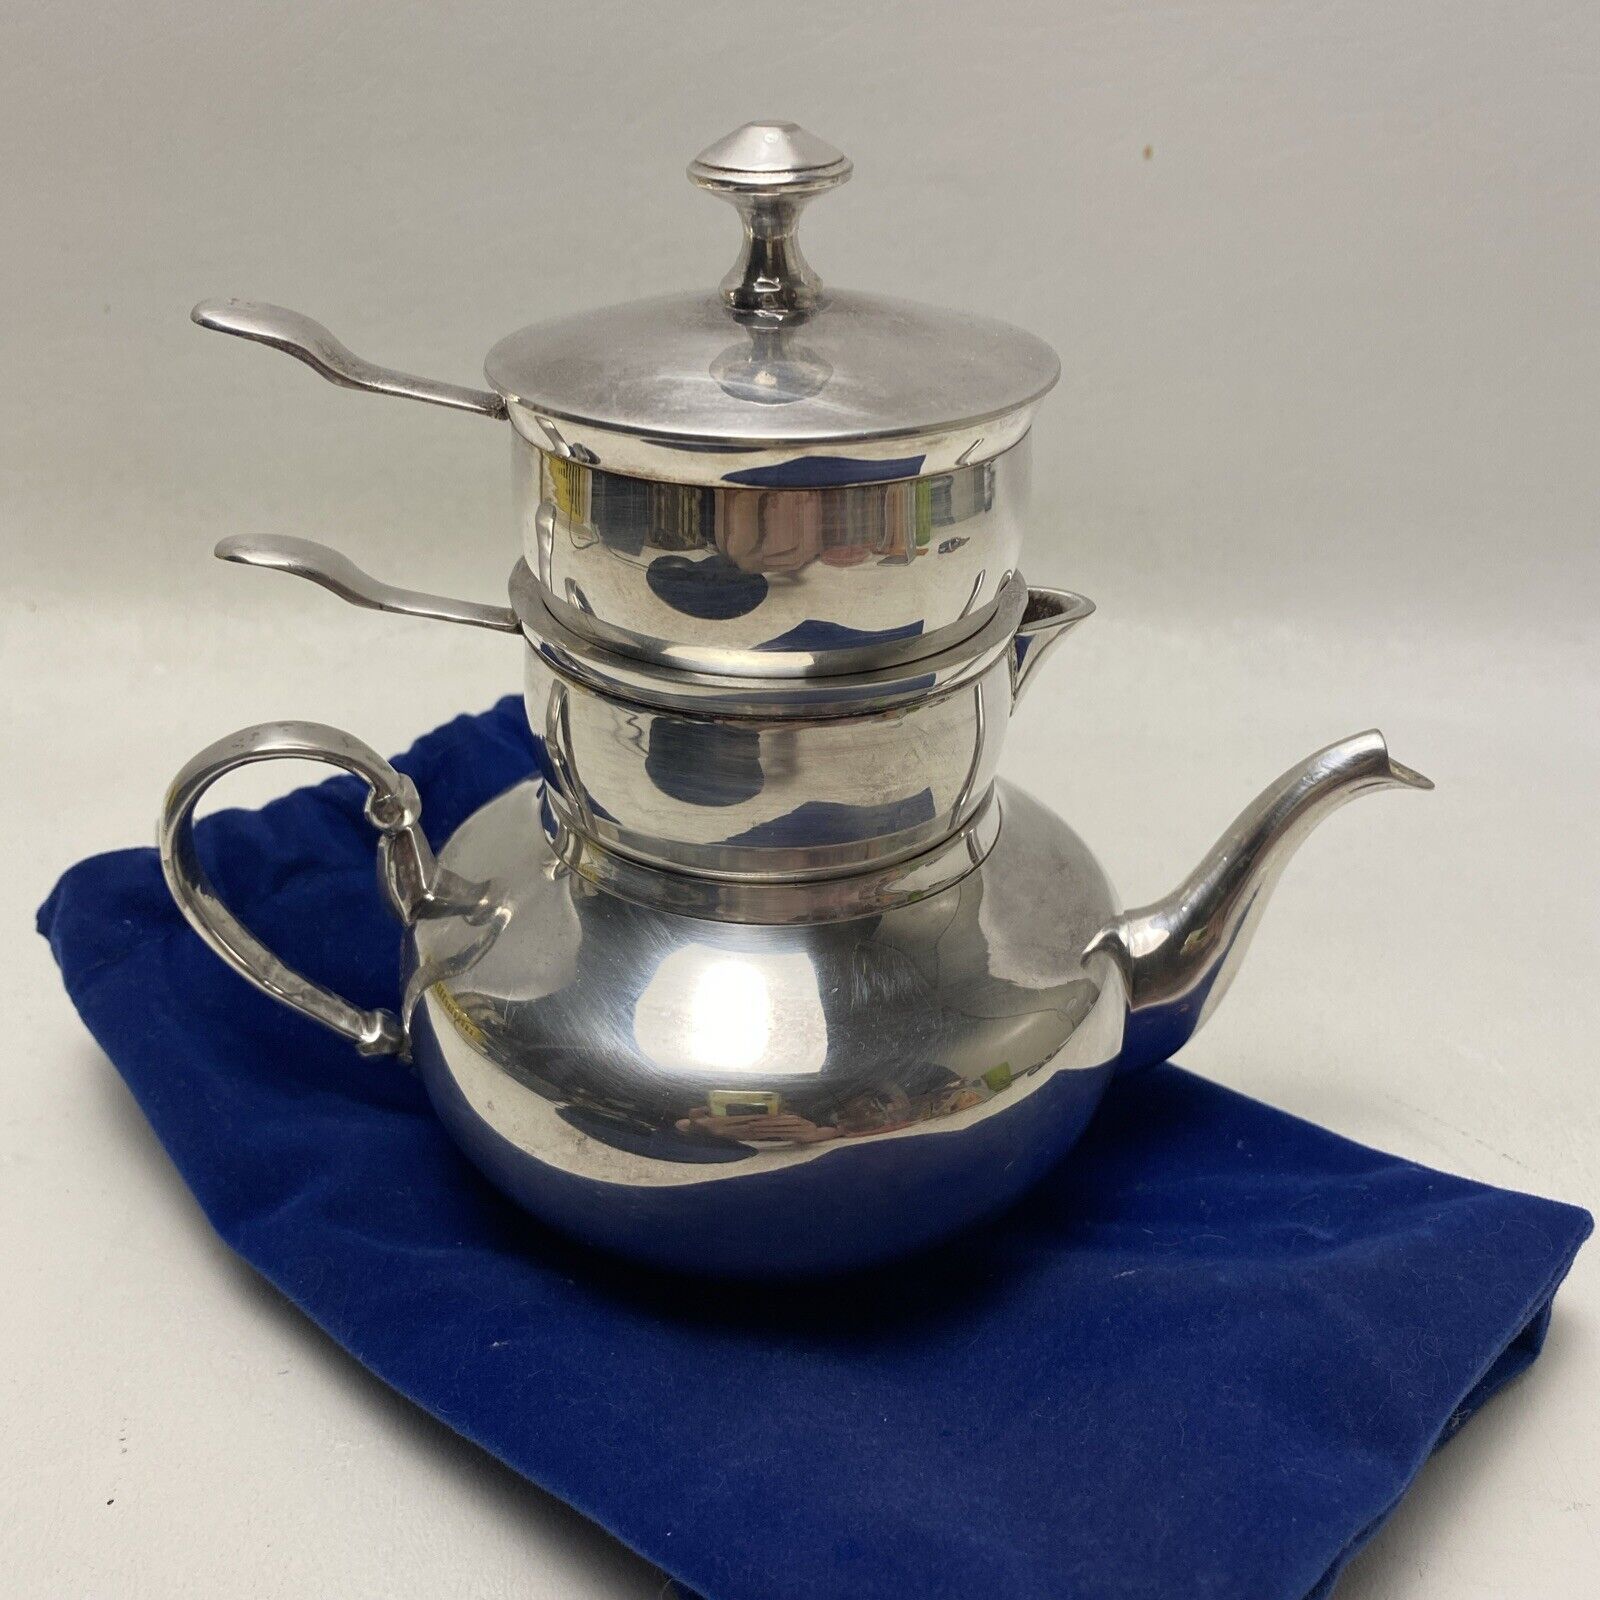 Restoration Hardware VTG Raj Teapot British Empire Stacked Silverplate Serves 2